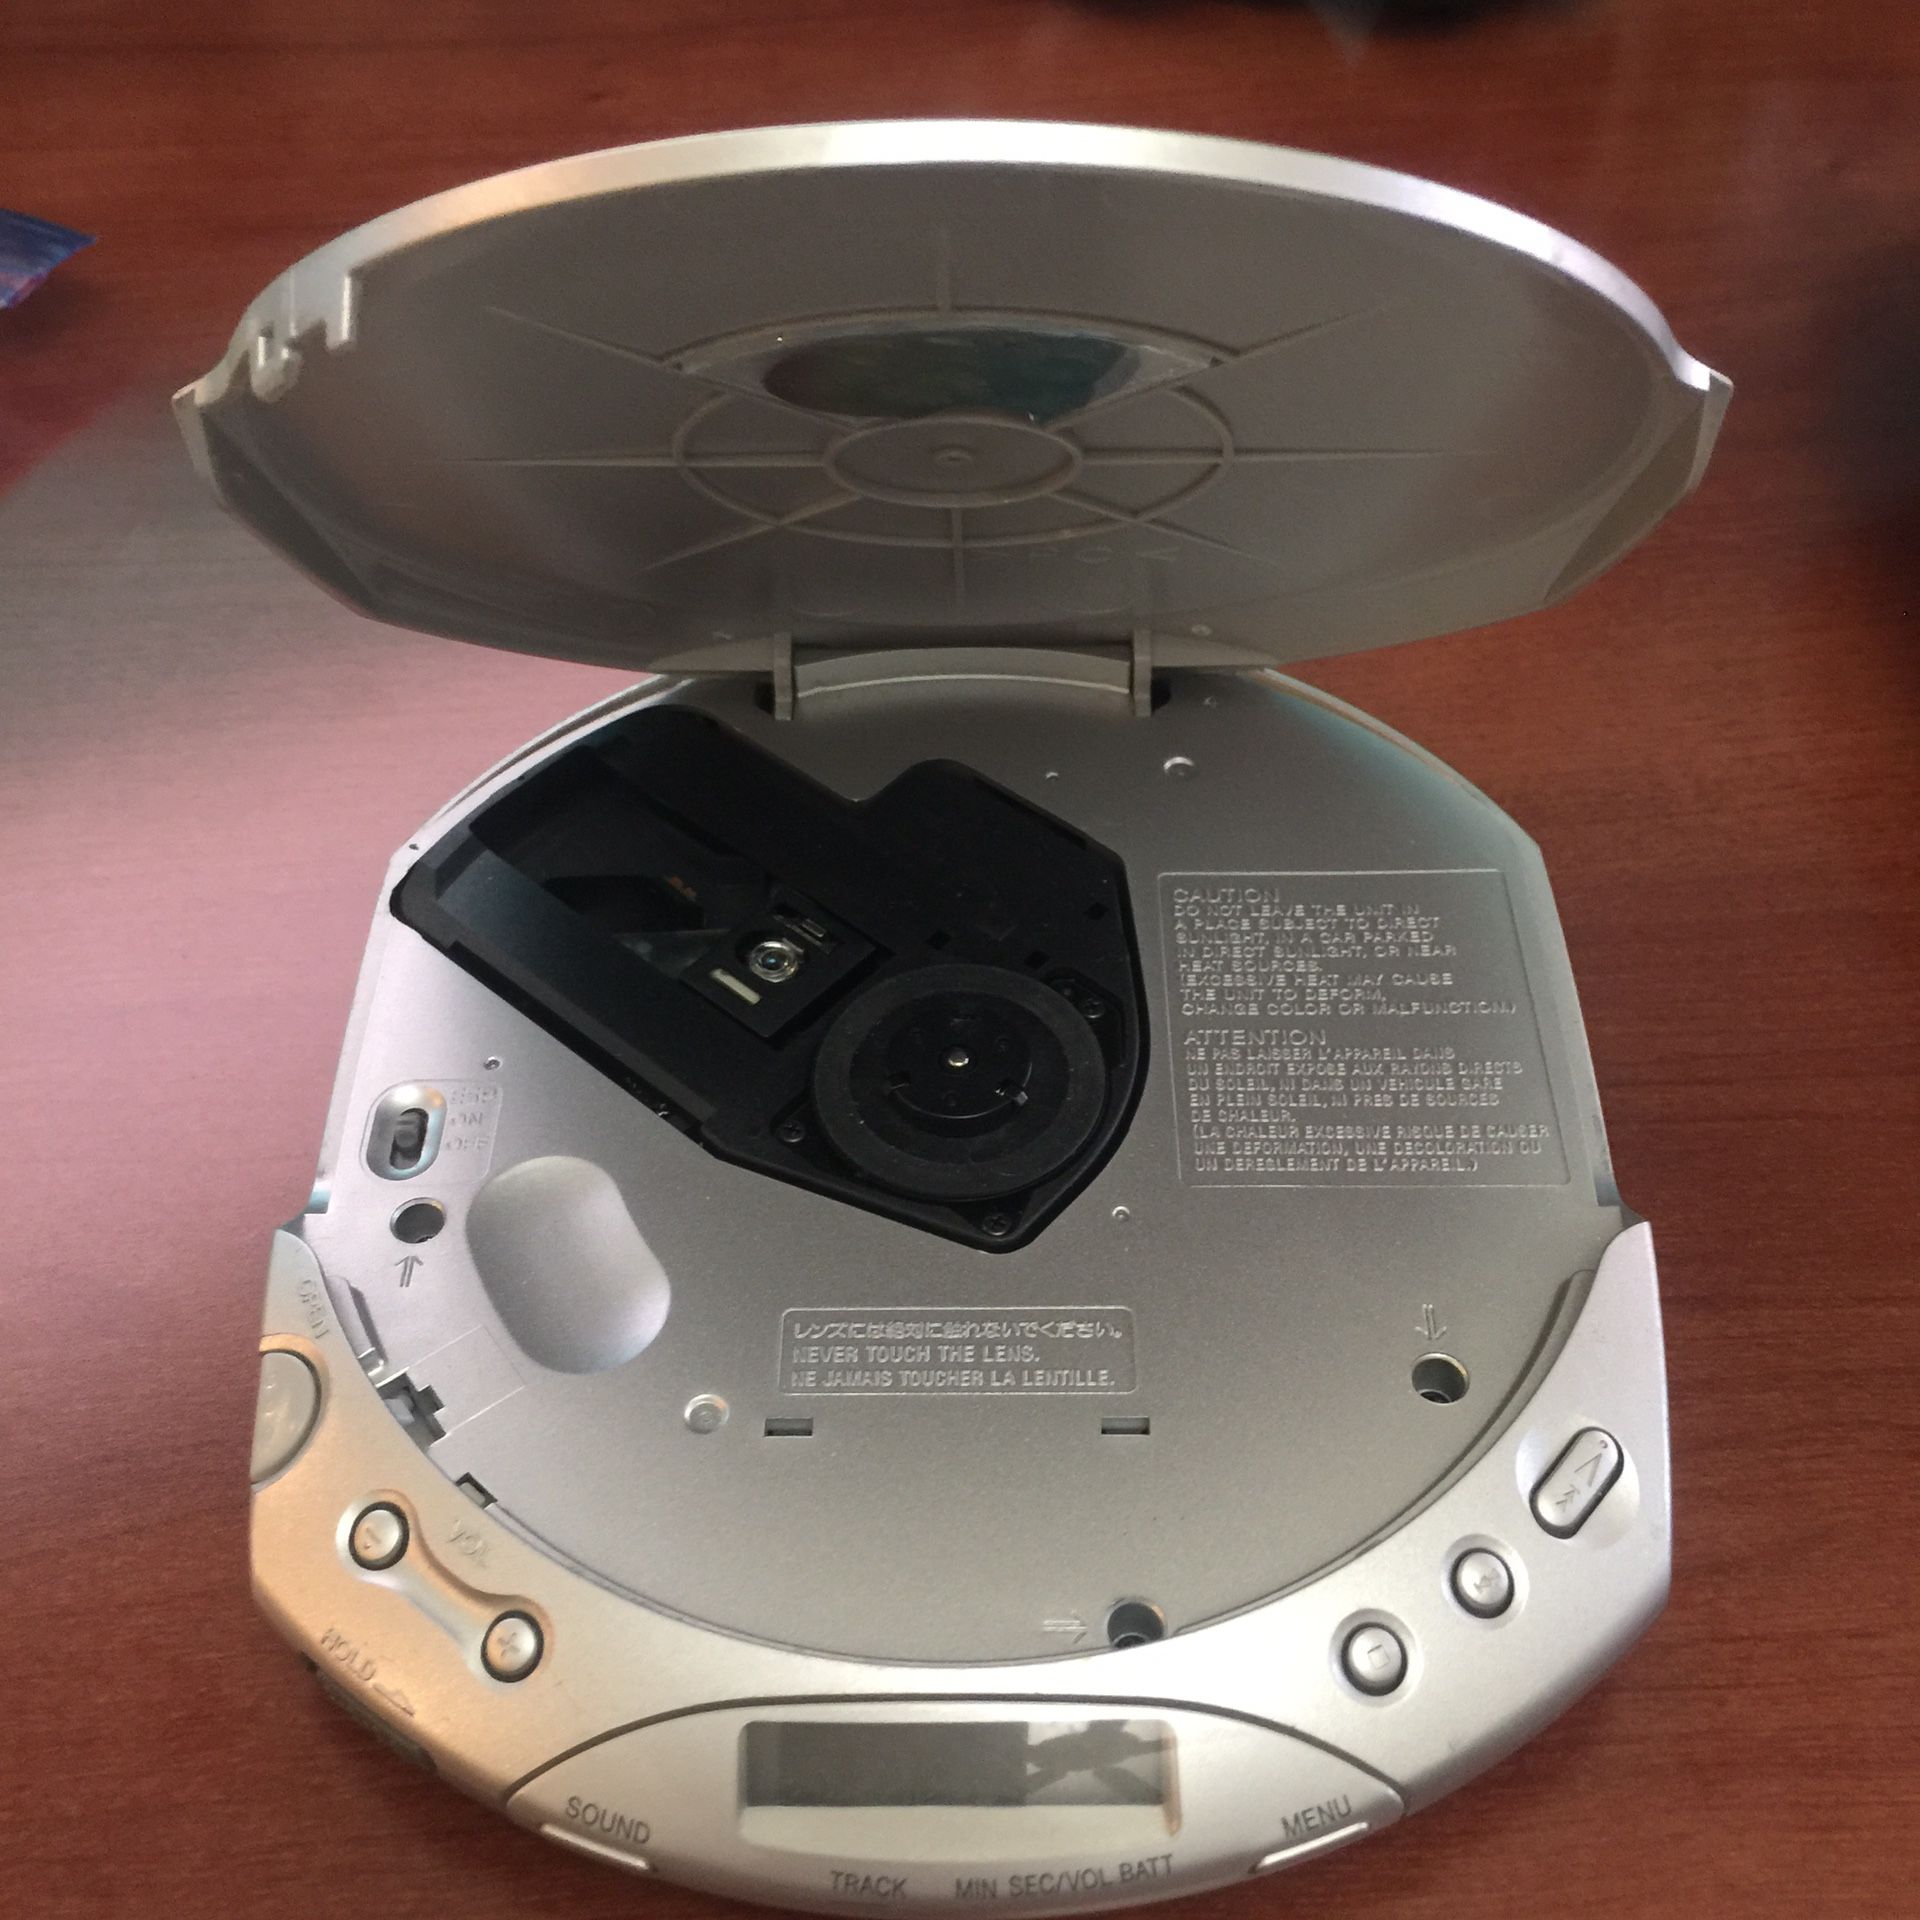 Sony Walkman CD Player - $20